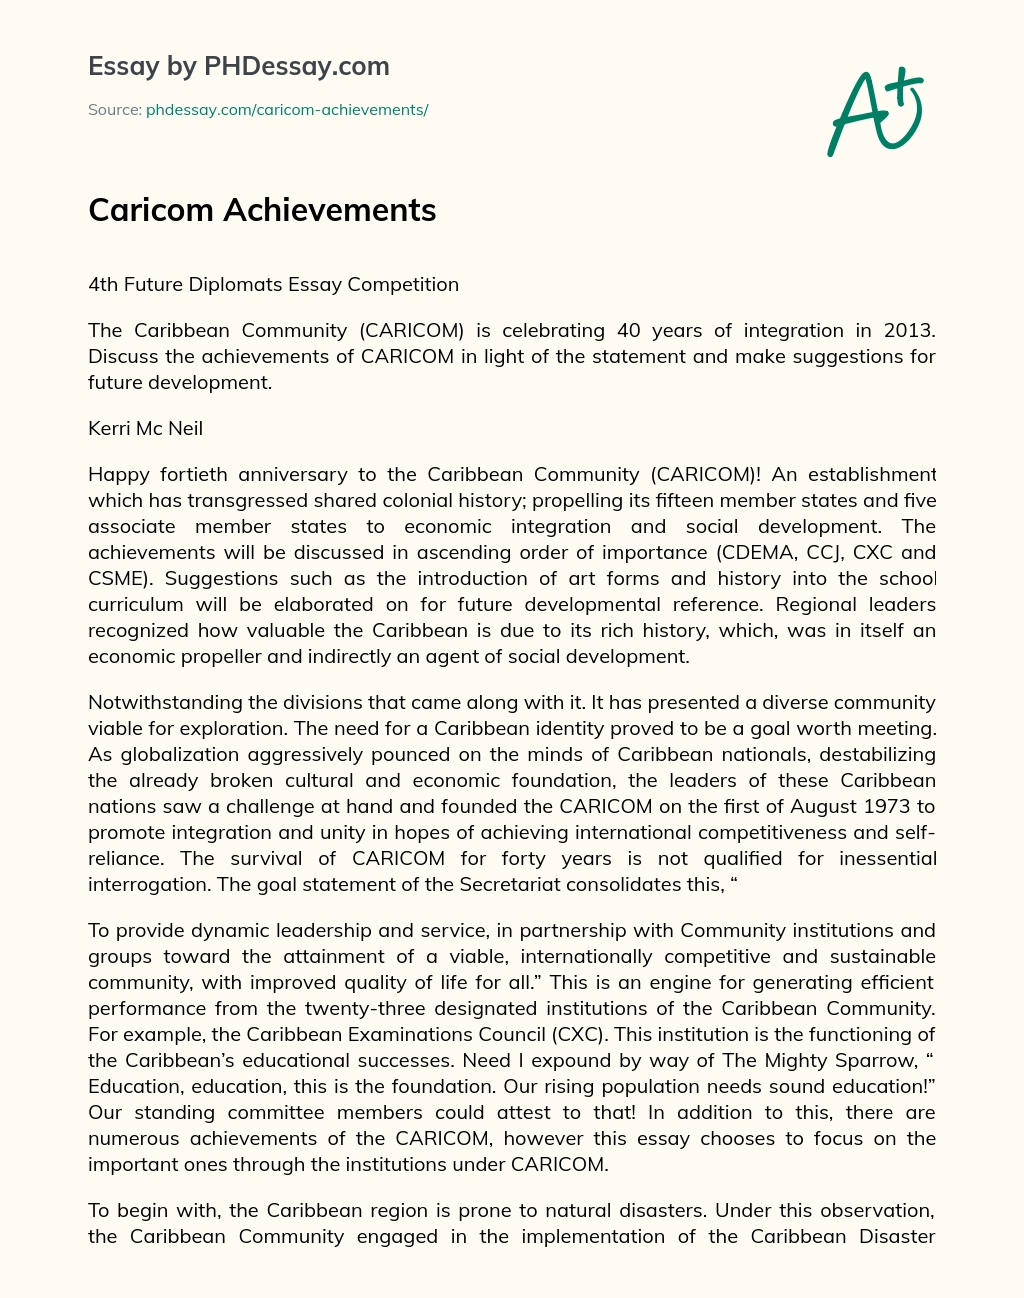 Caricom Achievements essay